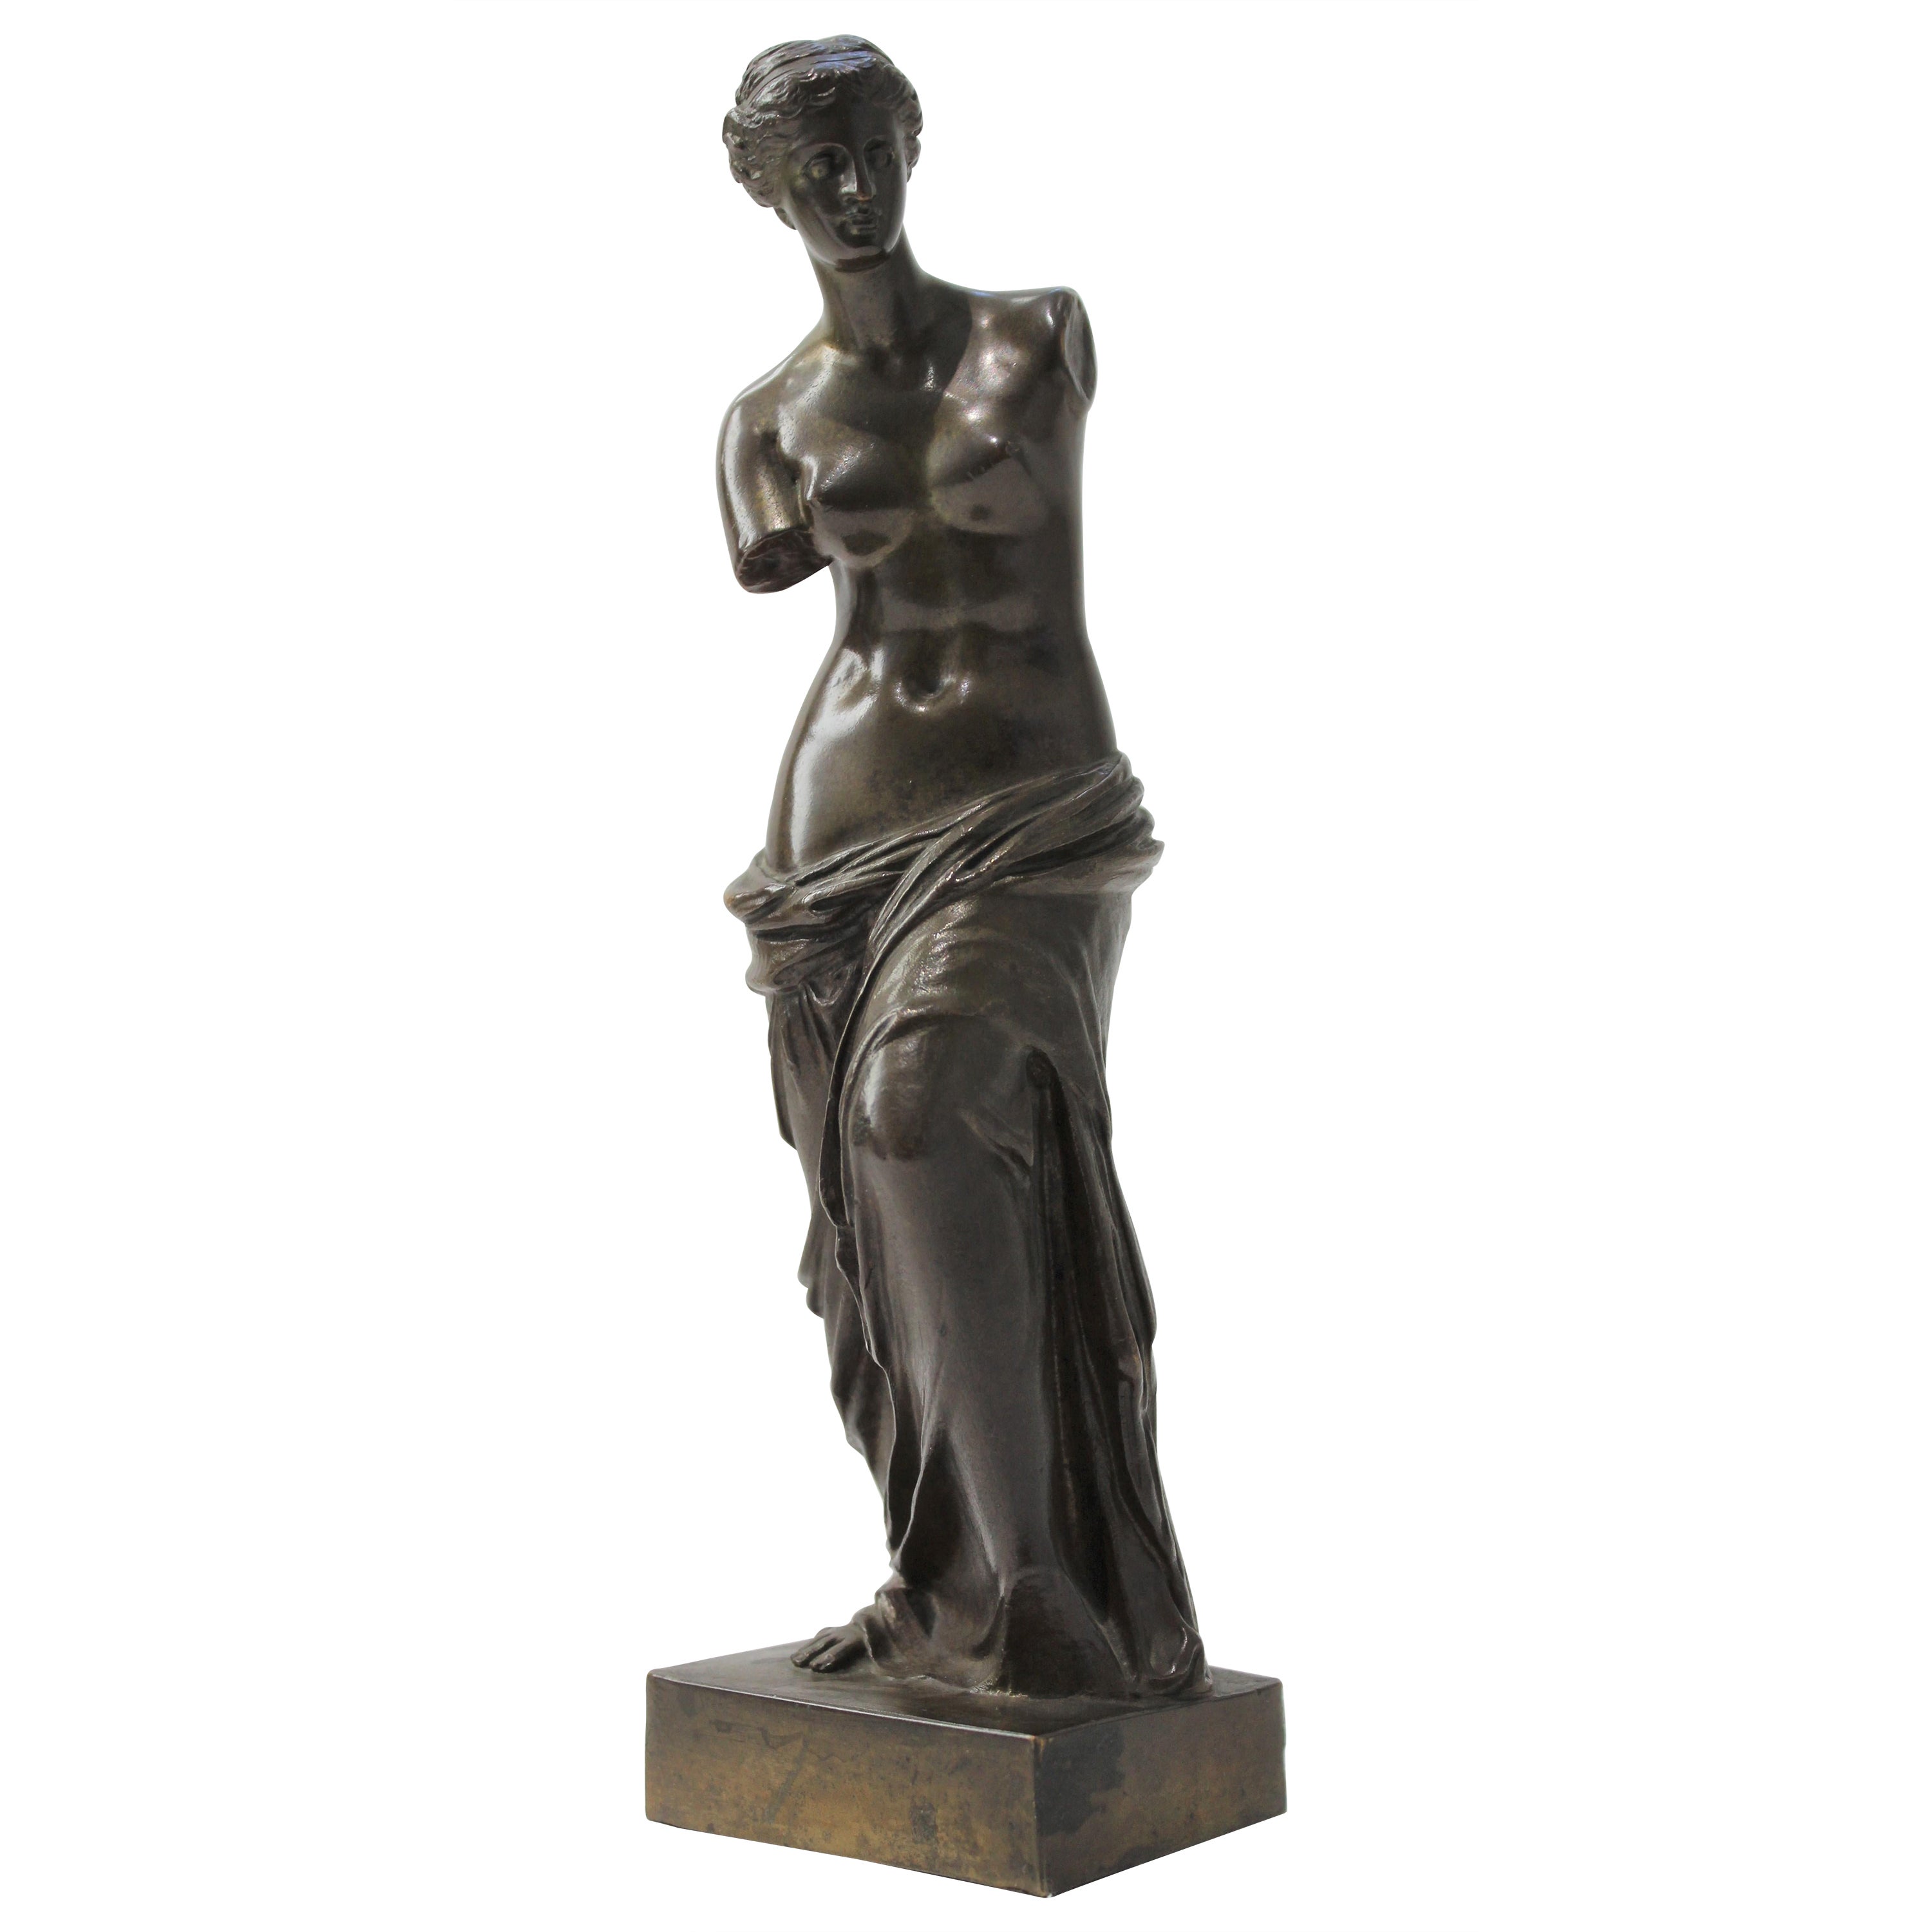 Bronze Sculpture of the Venus de Milo